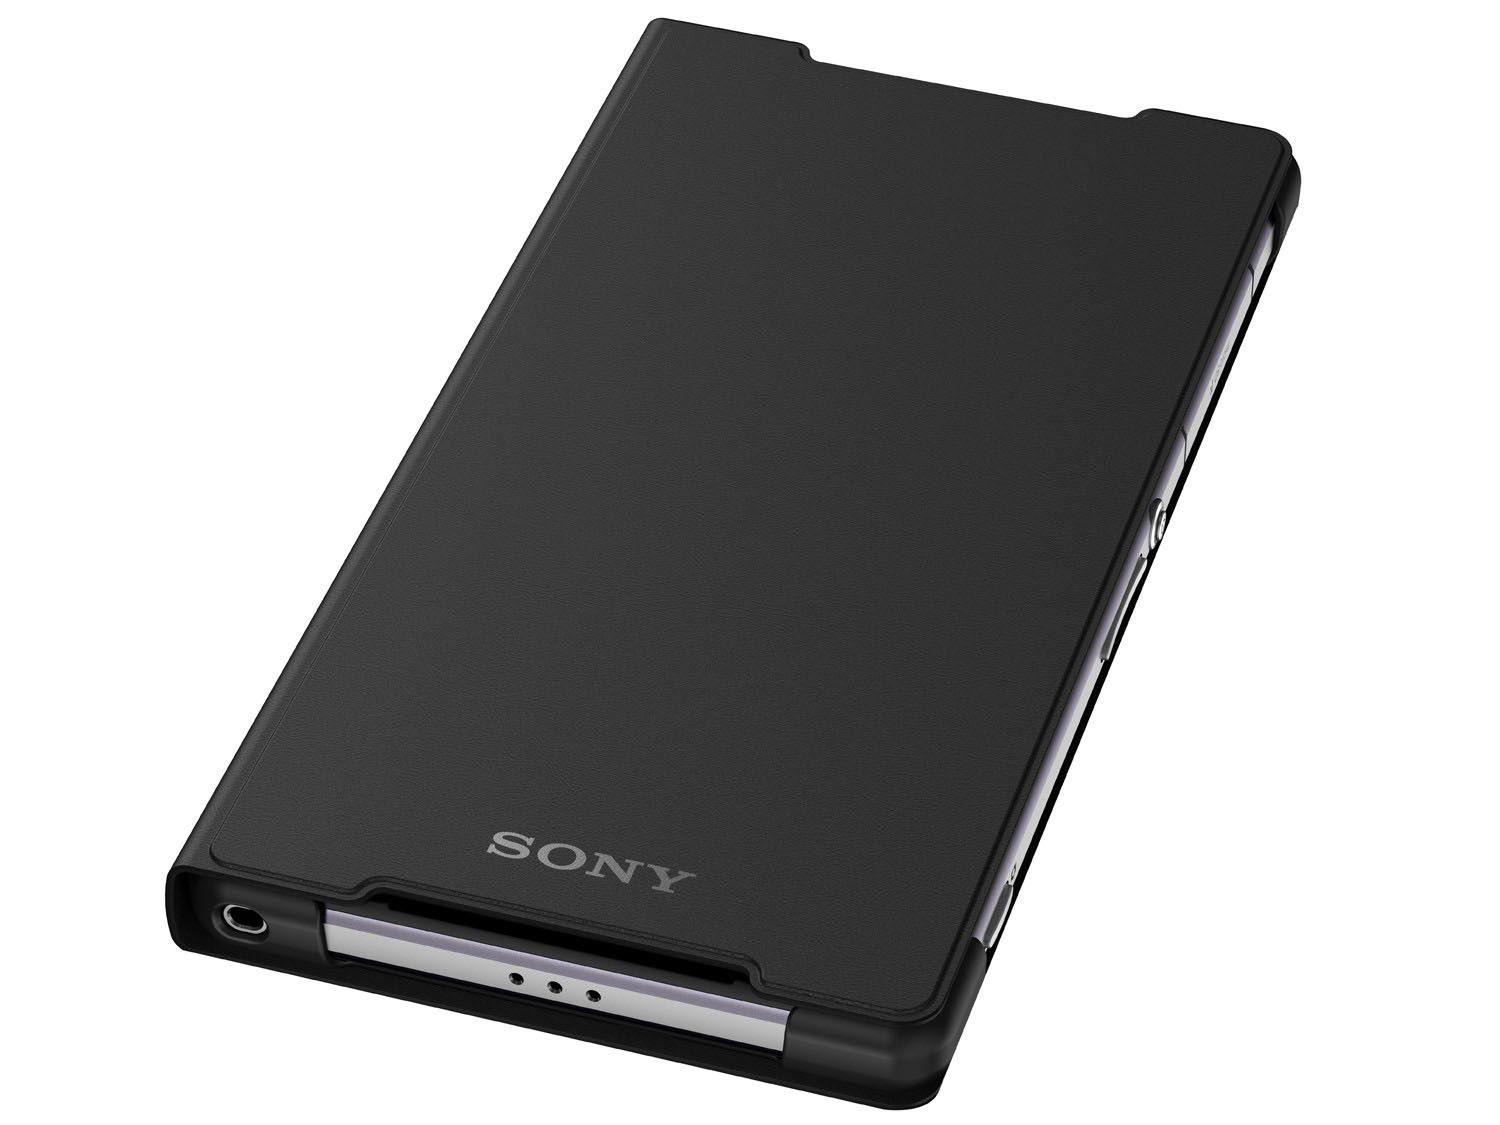 Чехол телефон сони. Sony Xperia z2 Black. Sony Xperia z2 чехол книжка. Чехол для телефона сони Xperia z2. Чехол Sony scr12.